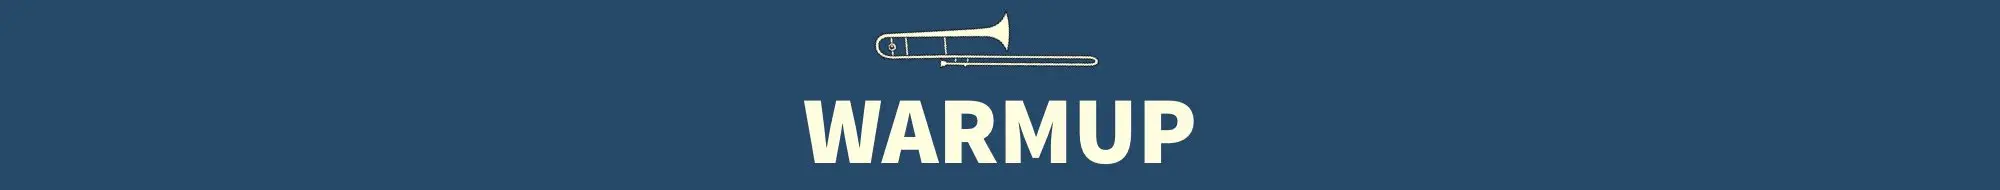 trombone warmup sheet music